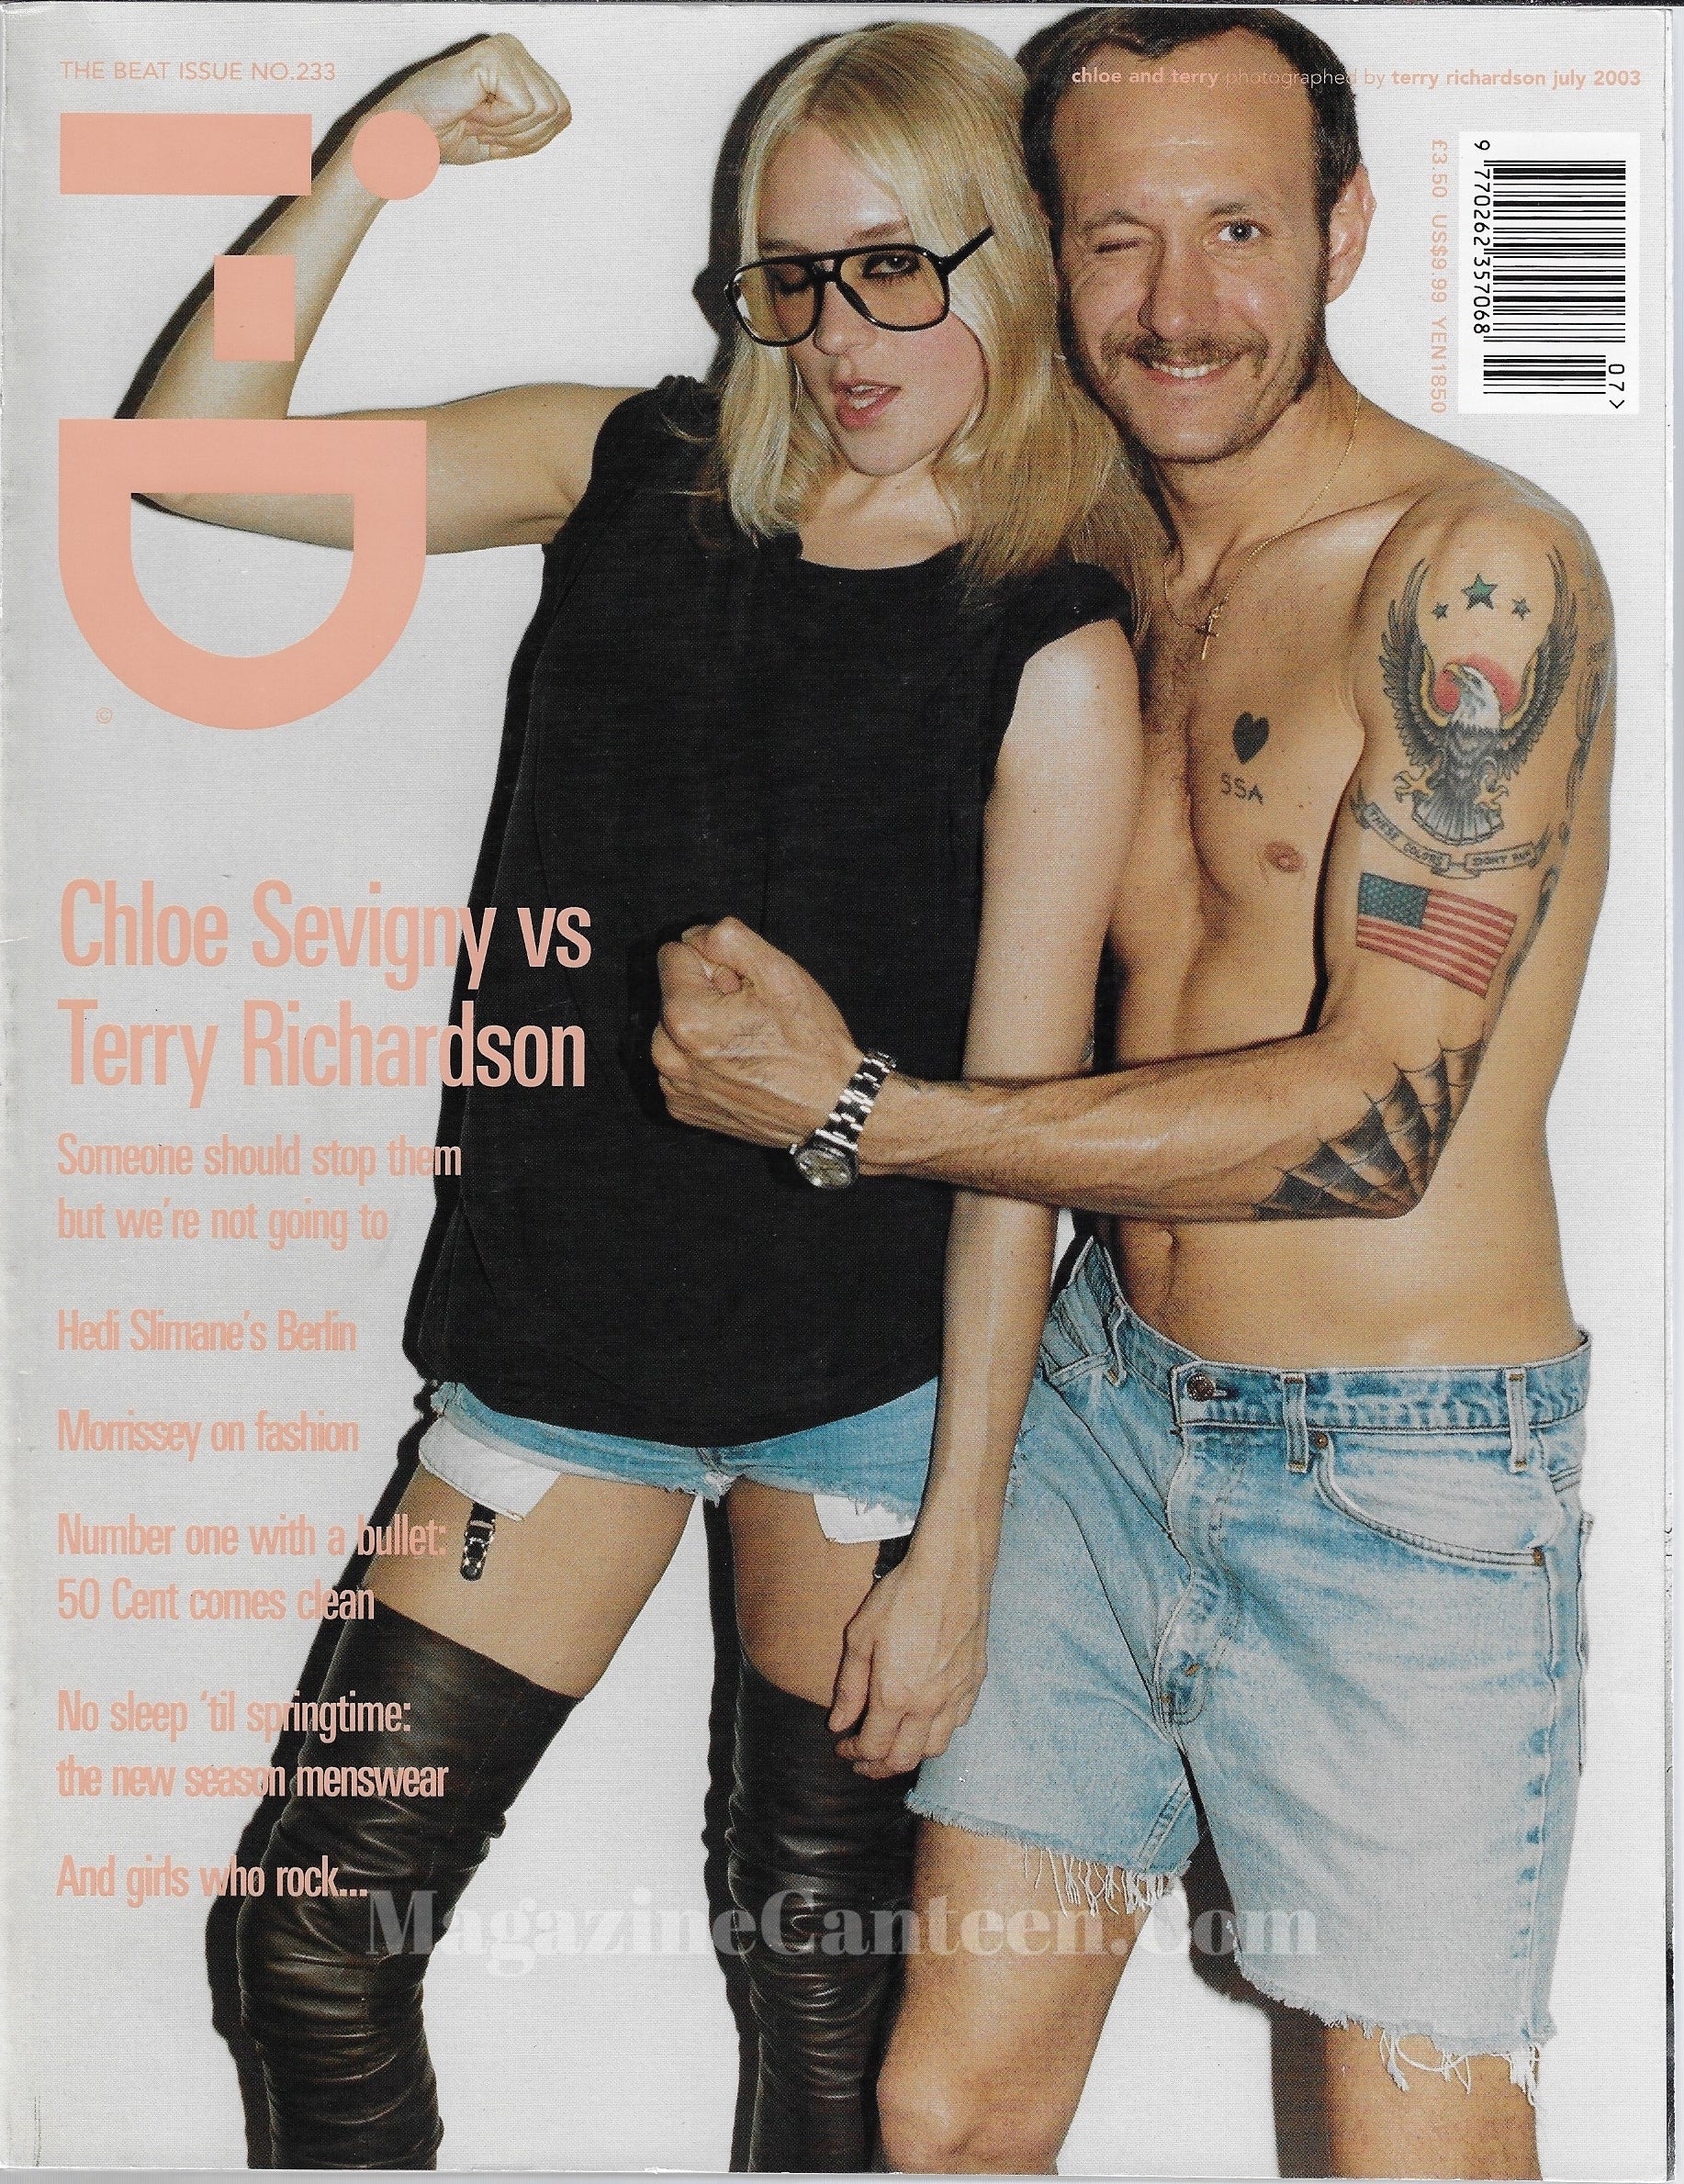 I-D Magazine 233 - Chloe Sevigny & Terry Richardson 2003